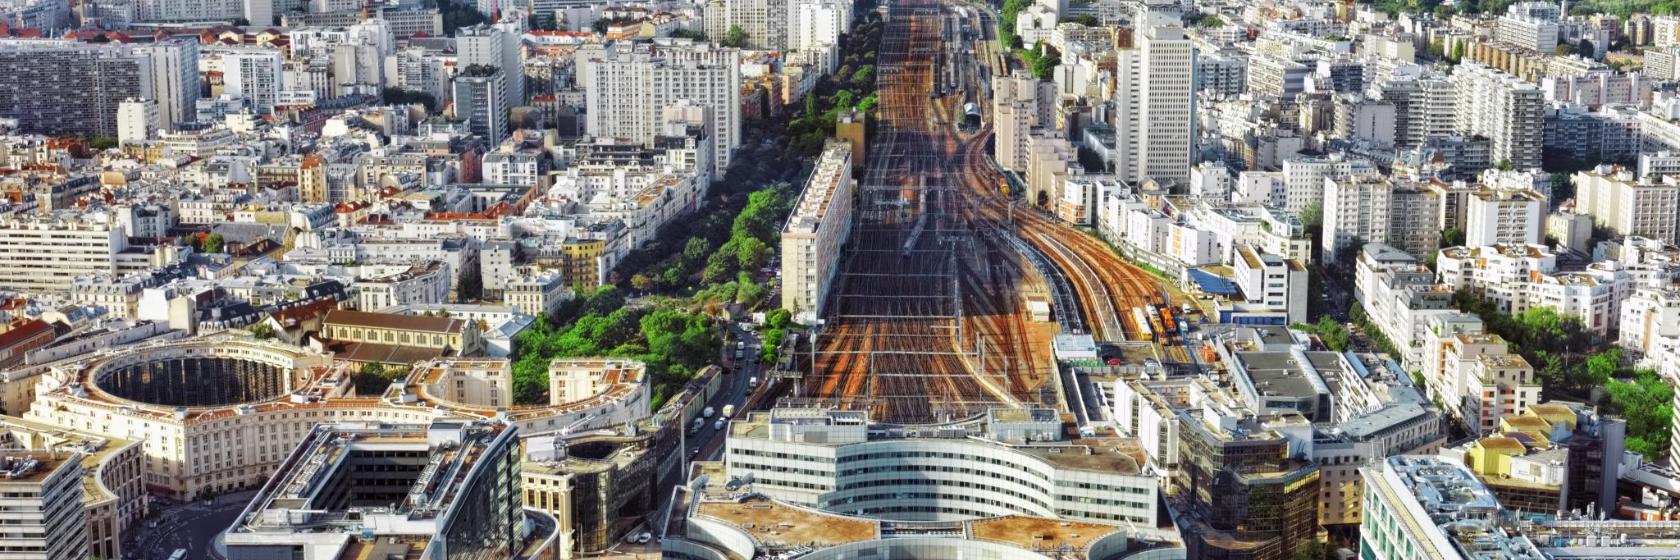 The 10 best hotels near Gare Montparnasse in Paris, France